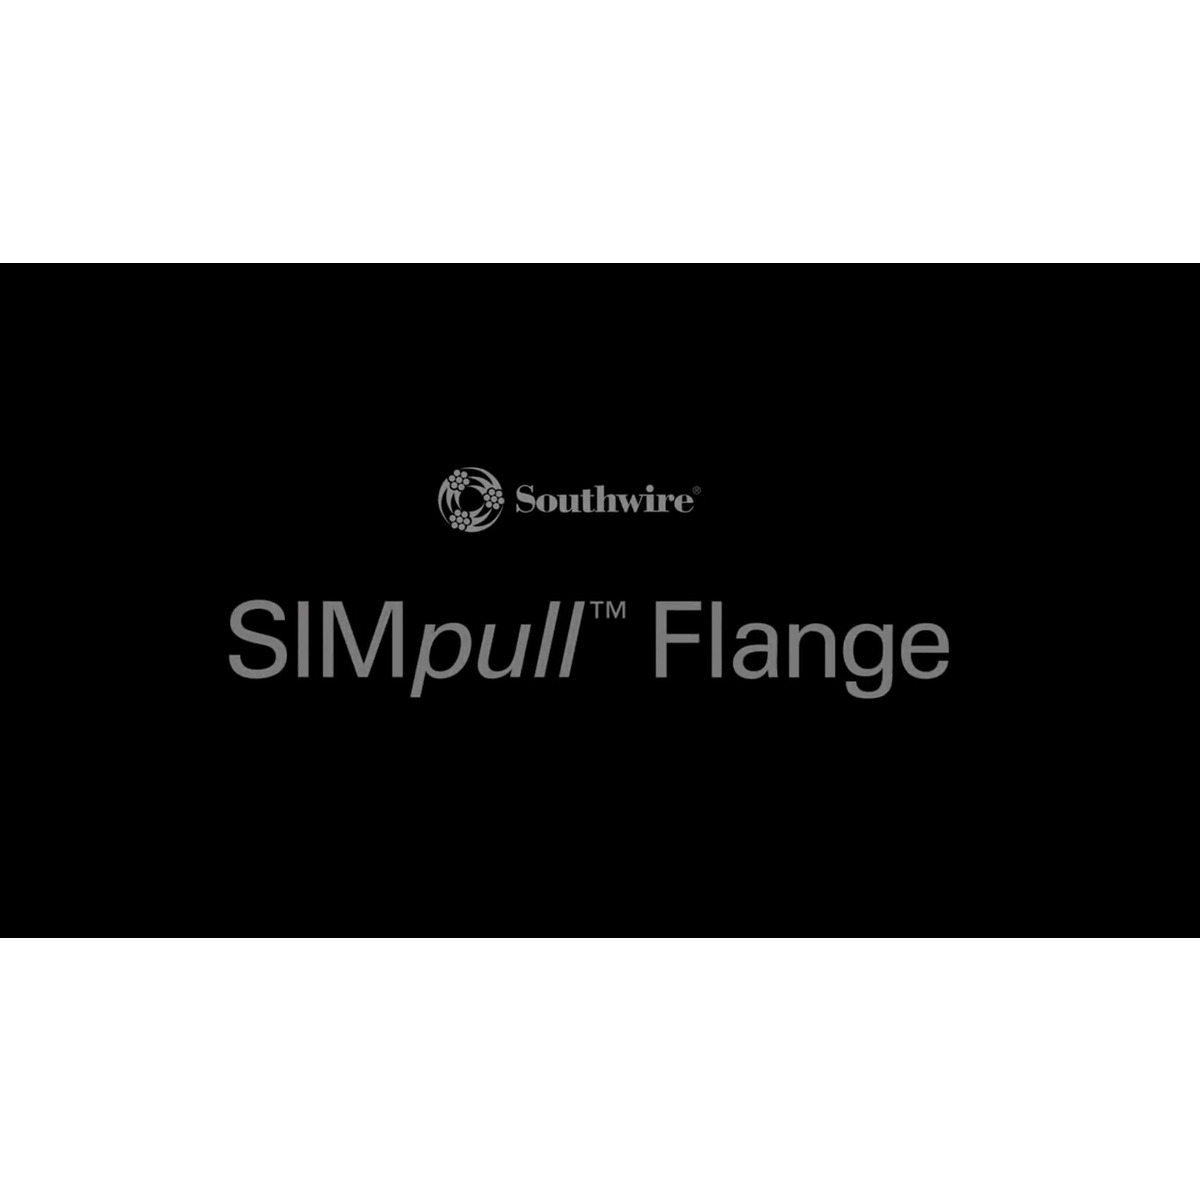 SIMpull™ FLANGE